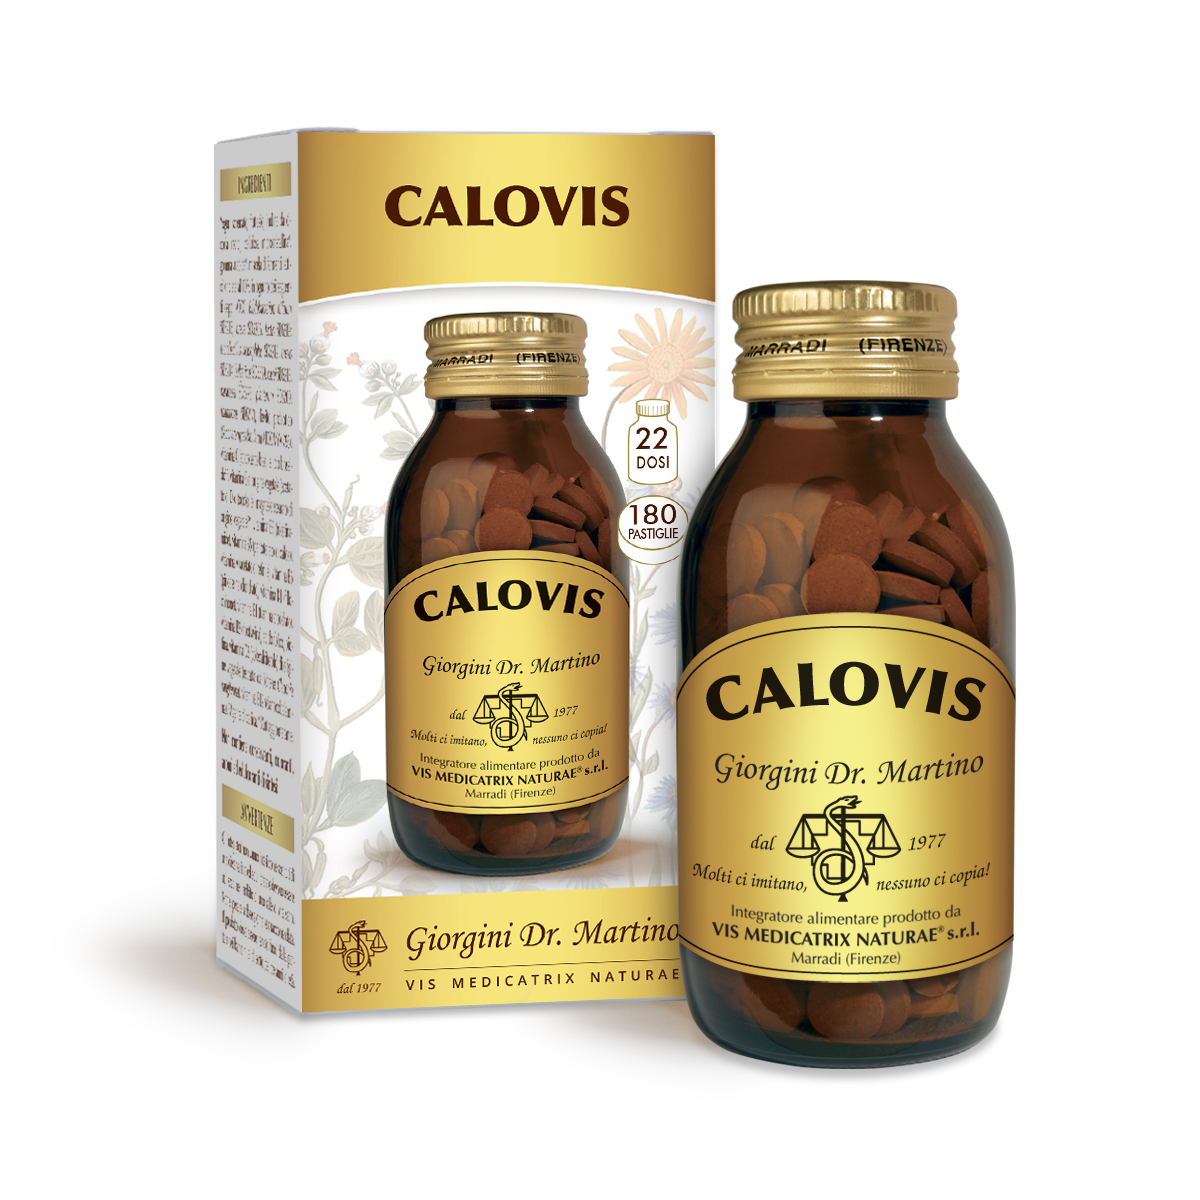 CALOVIS 180 pastiglie